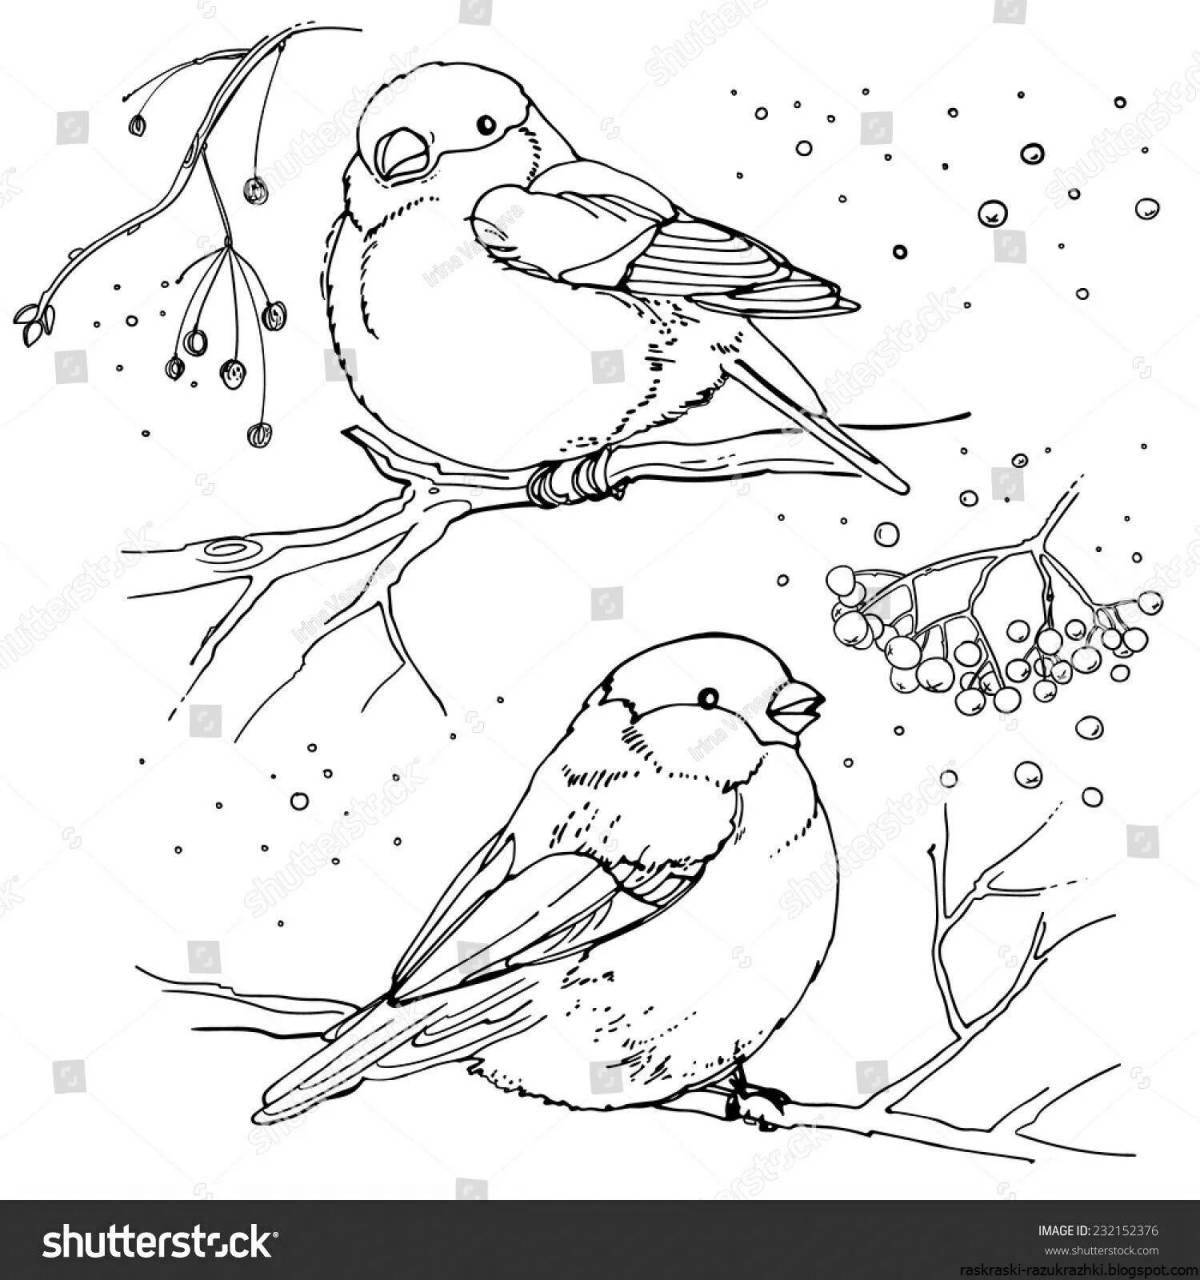 Snow bullfinches in winter